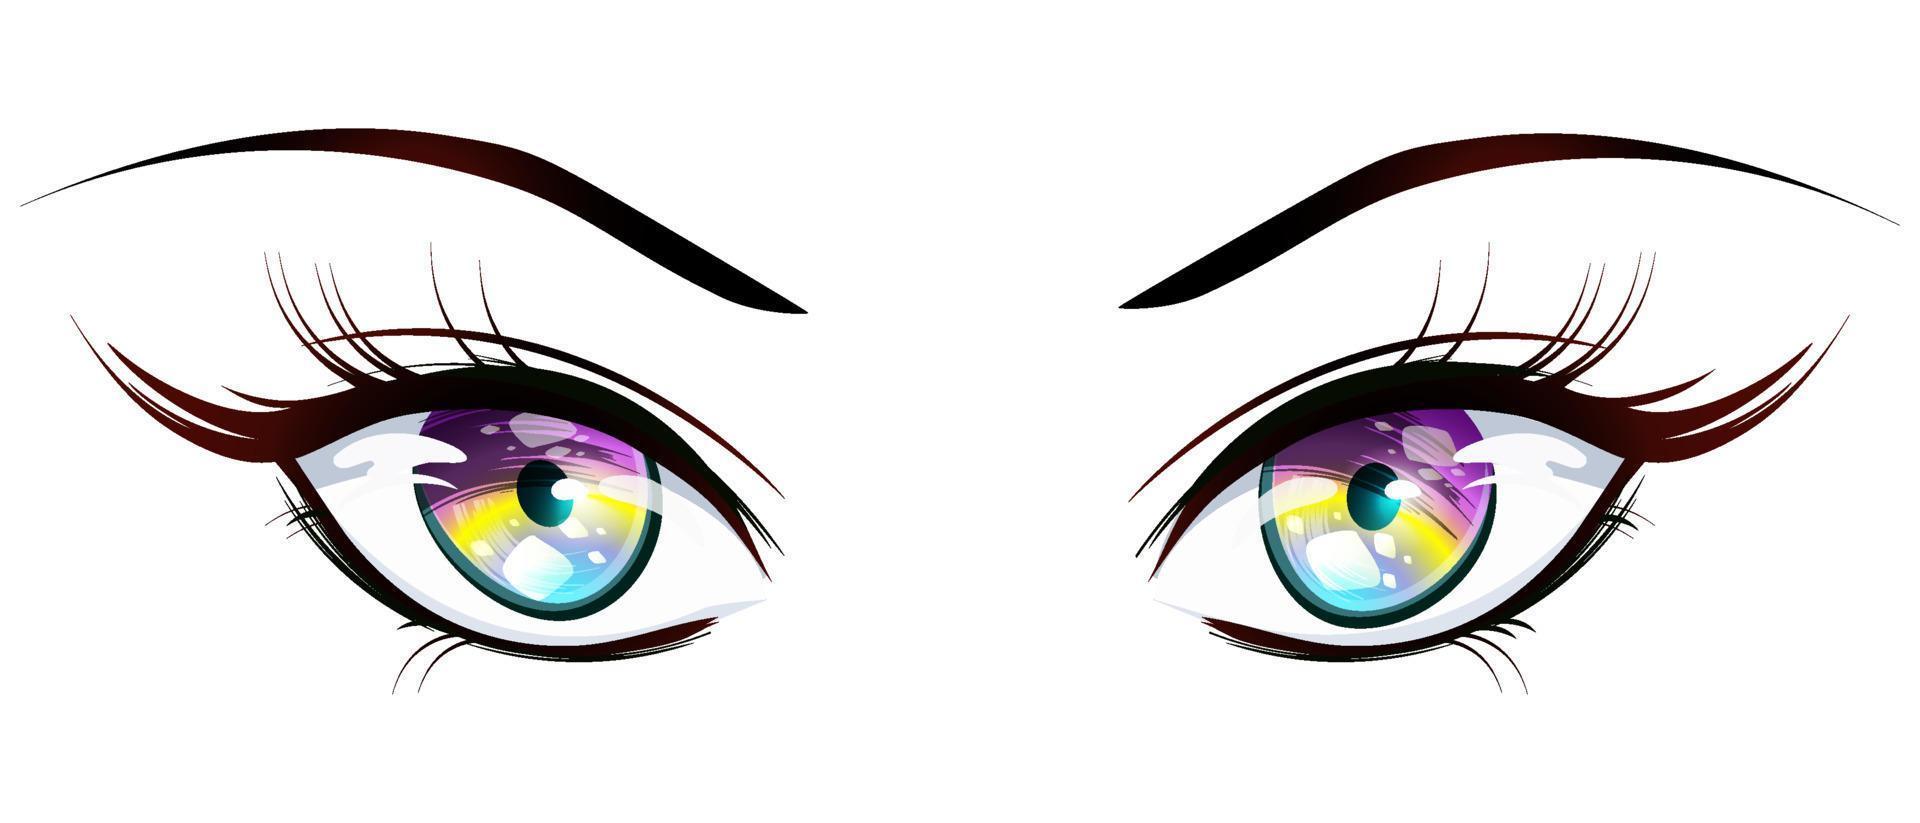 How to Draw Surprised Anime or Manga Eyes - AnimeOutline